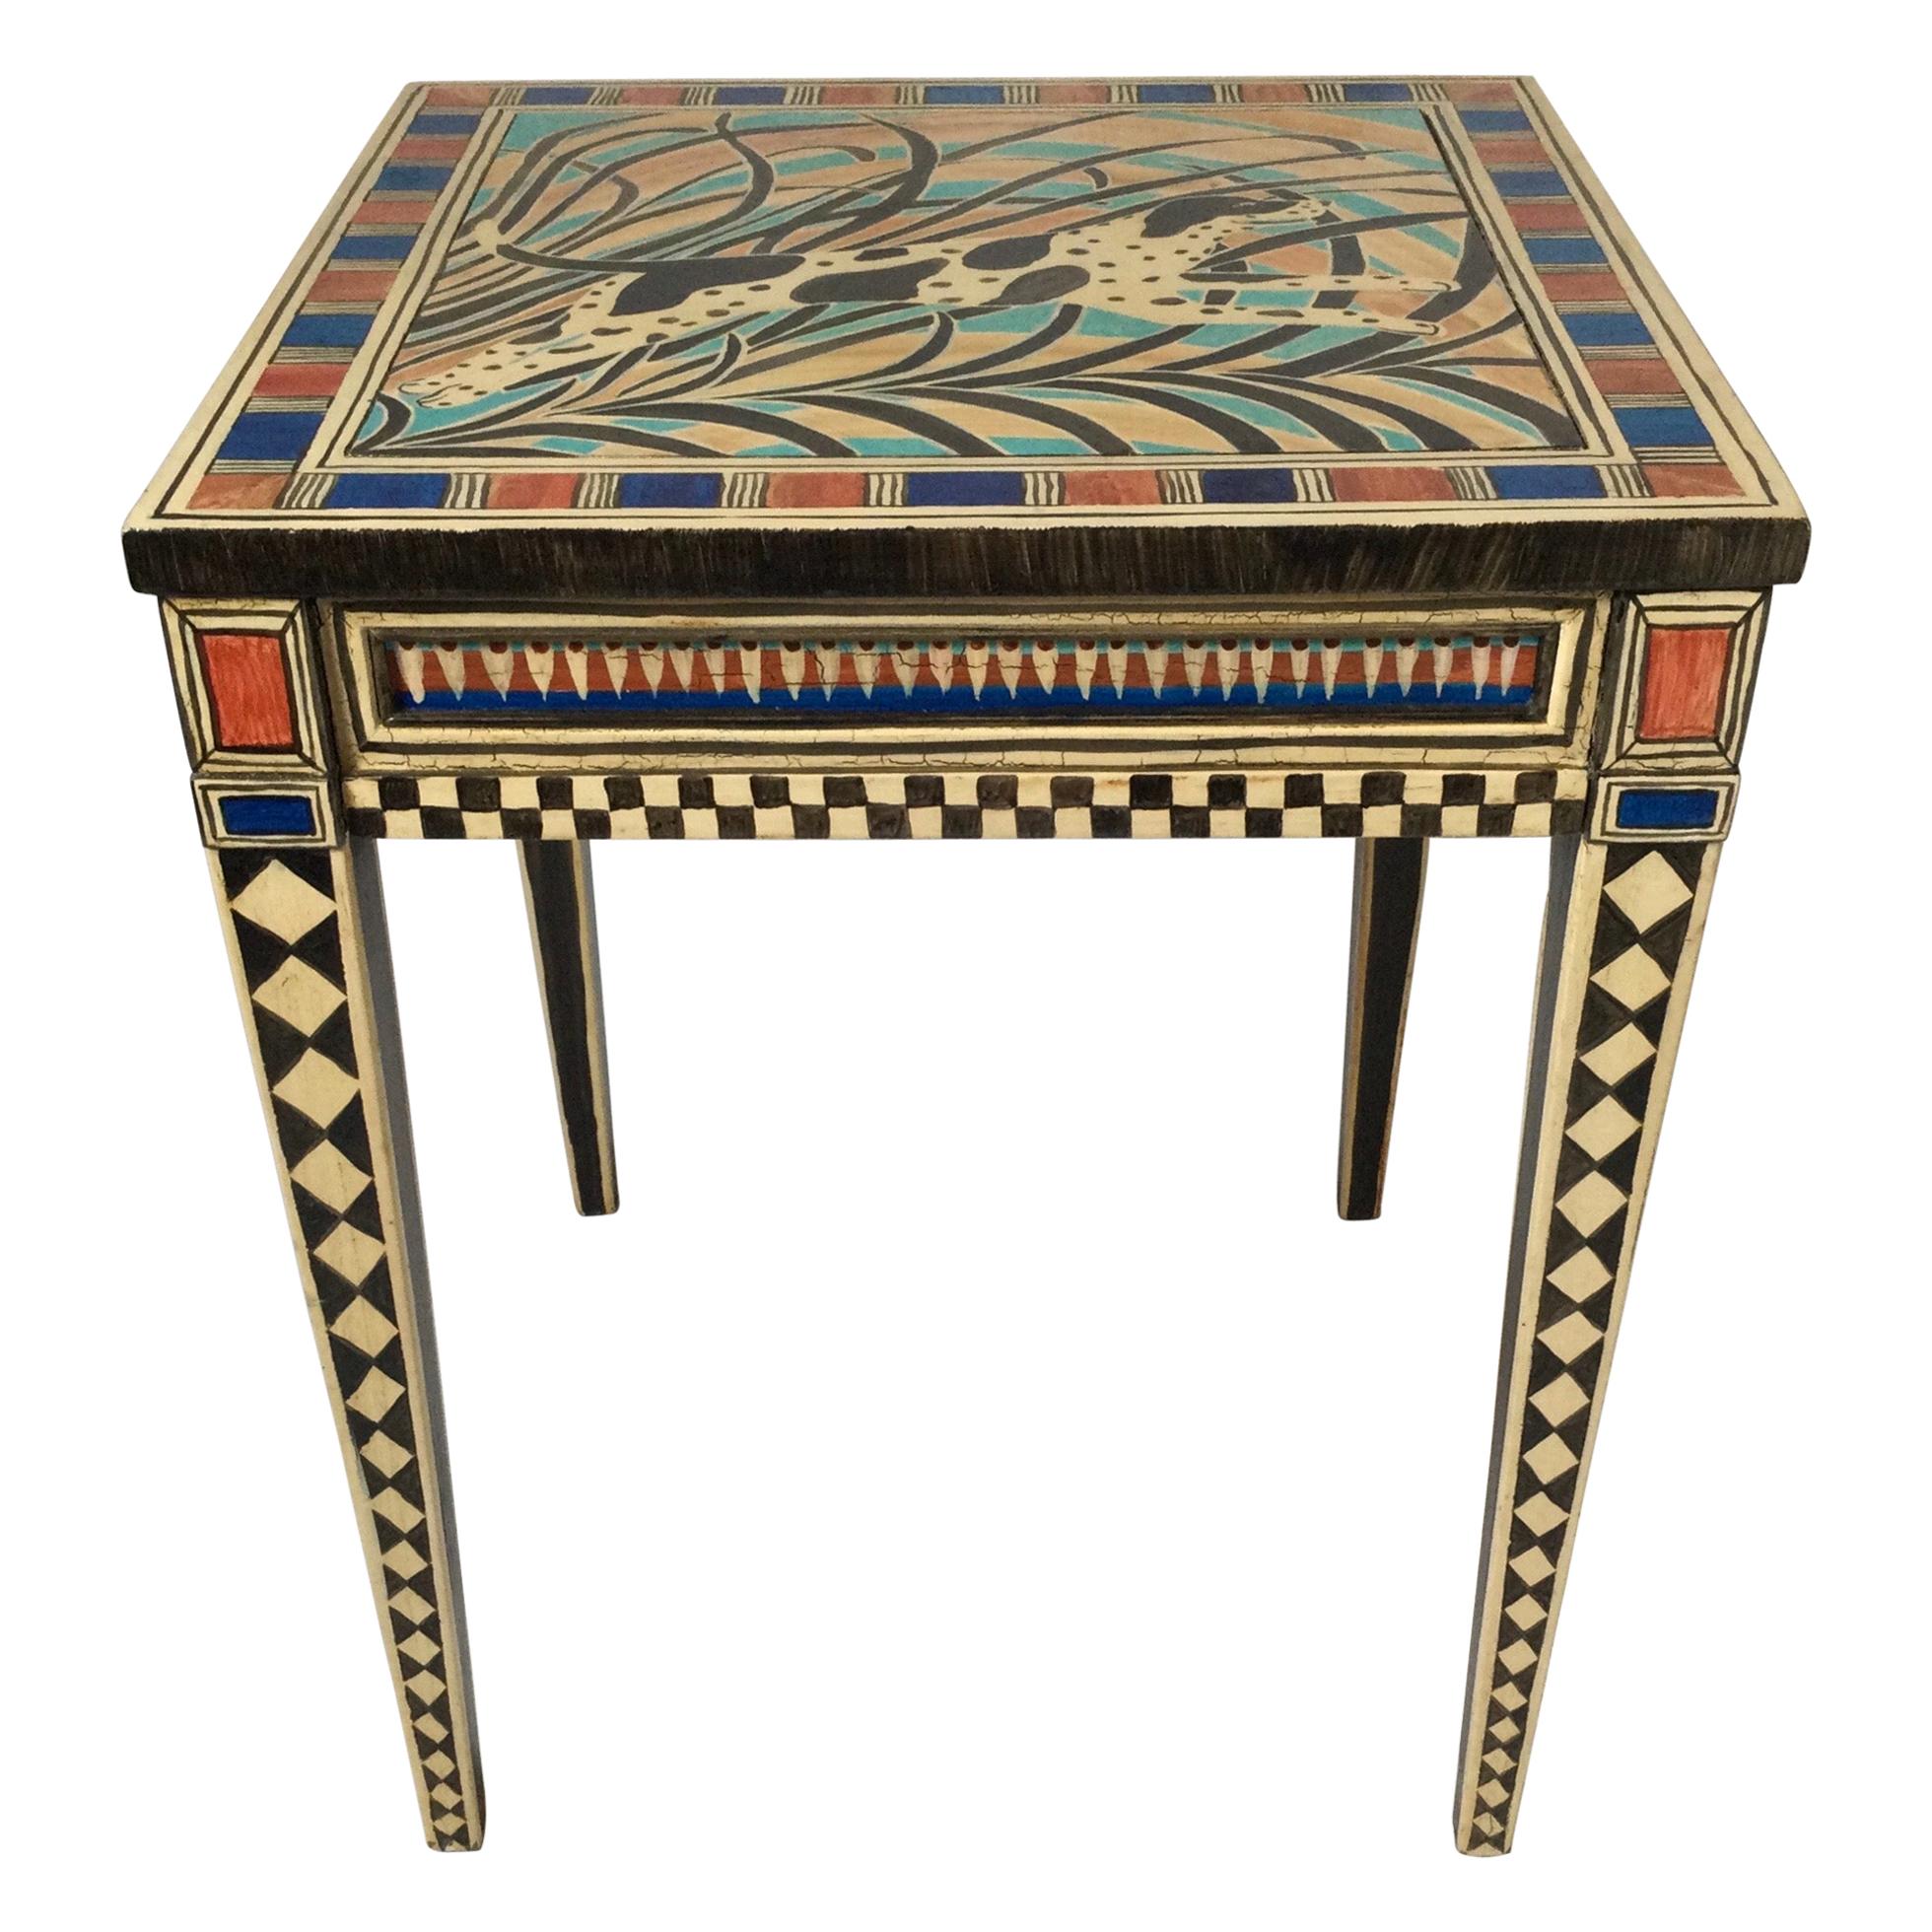 Miriam Riggs Folk Art Decorated Side Table